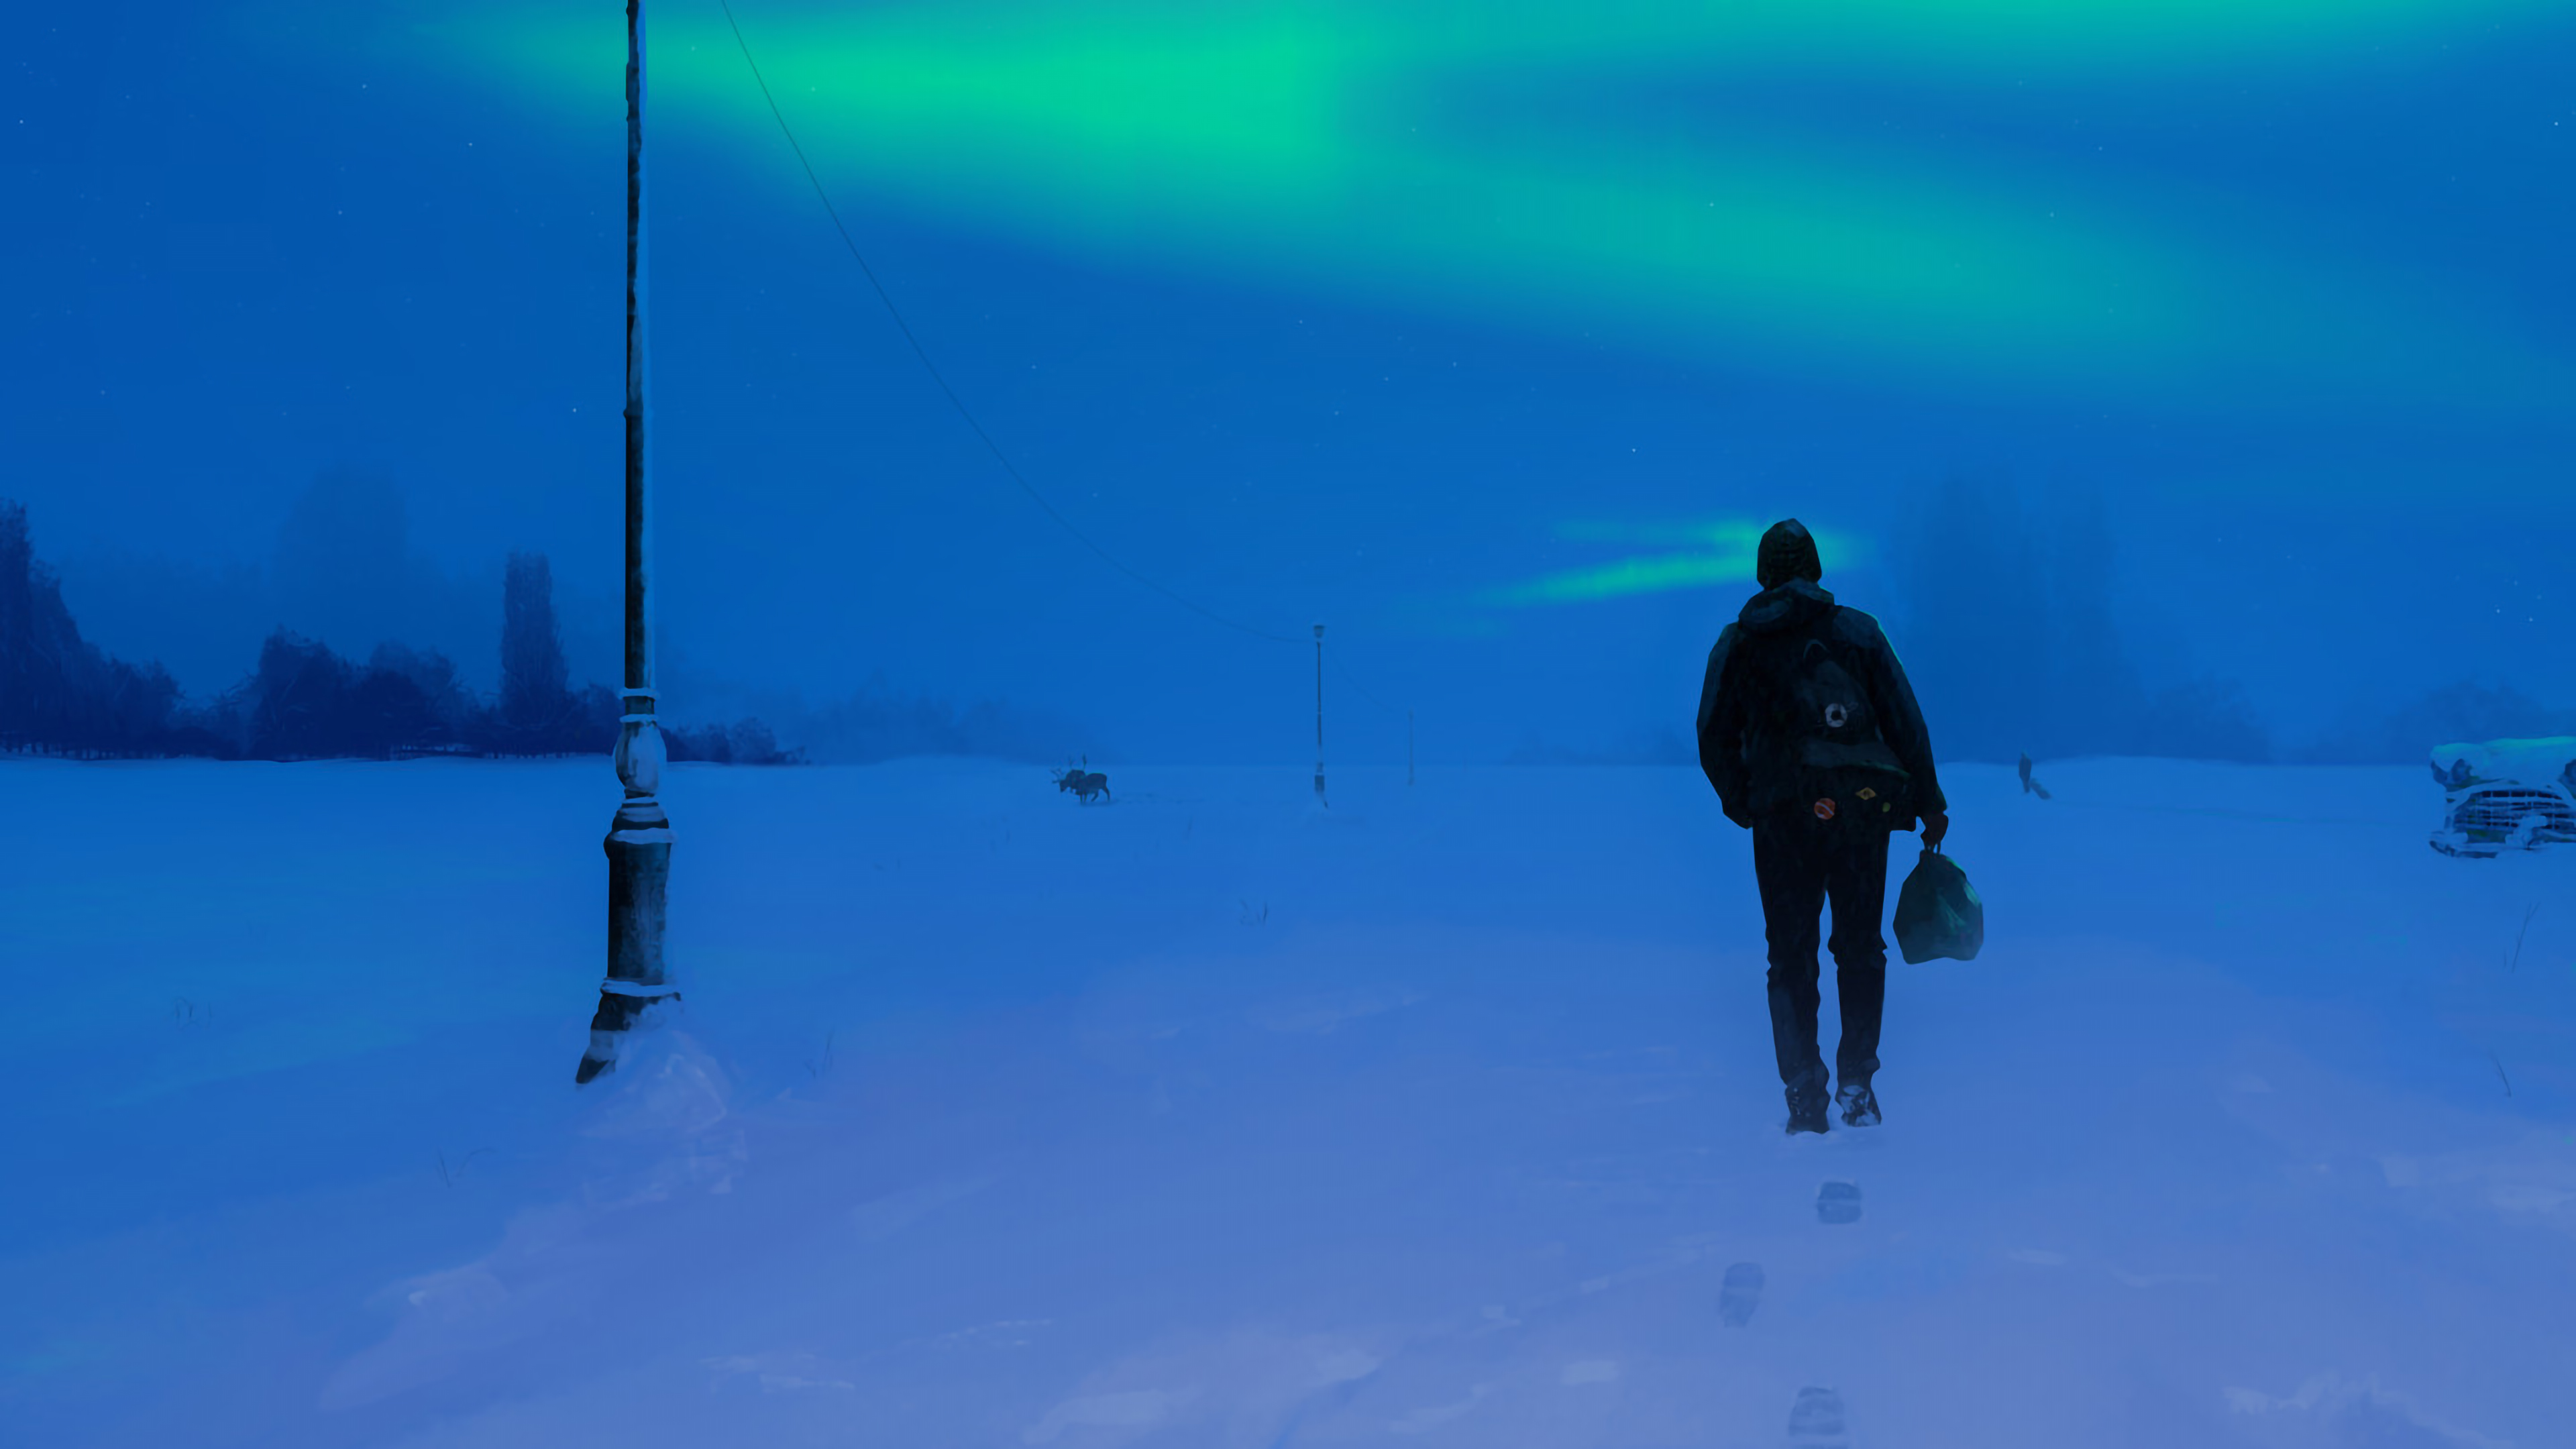 General 3840x2160 aurorae alone snow walking elk light post foot prints winter low light